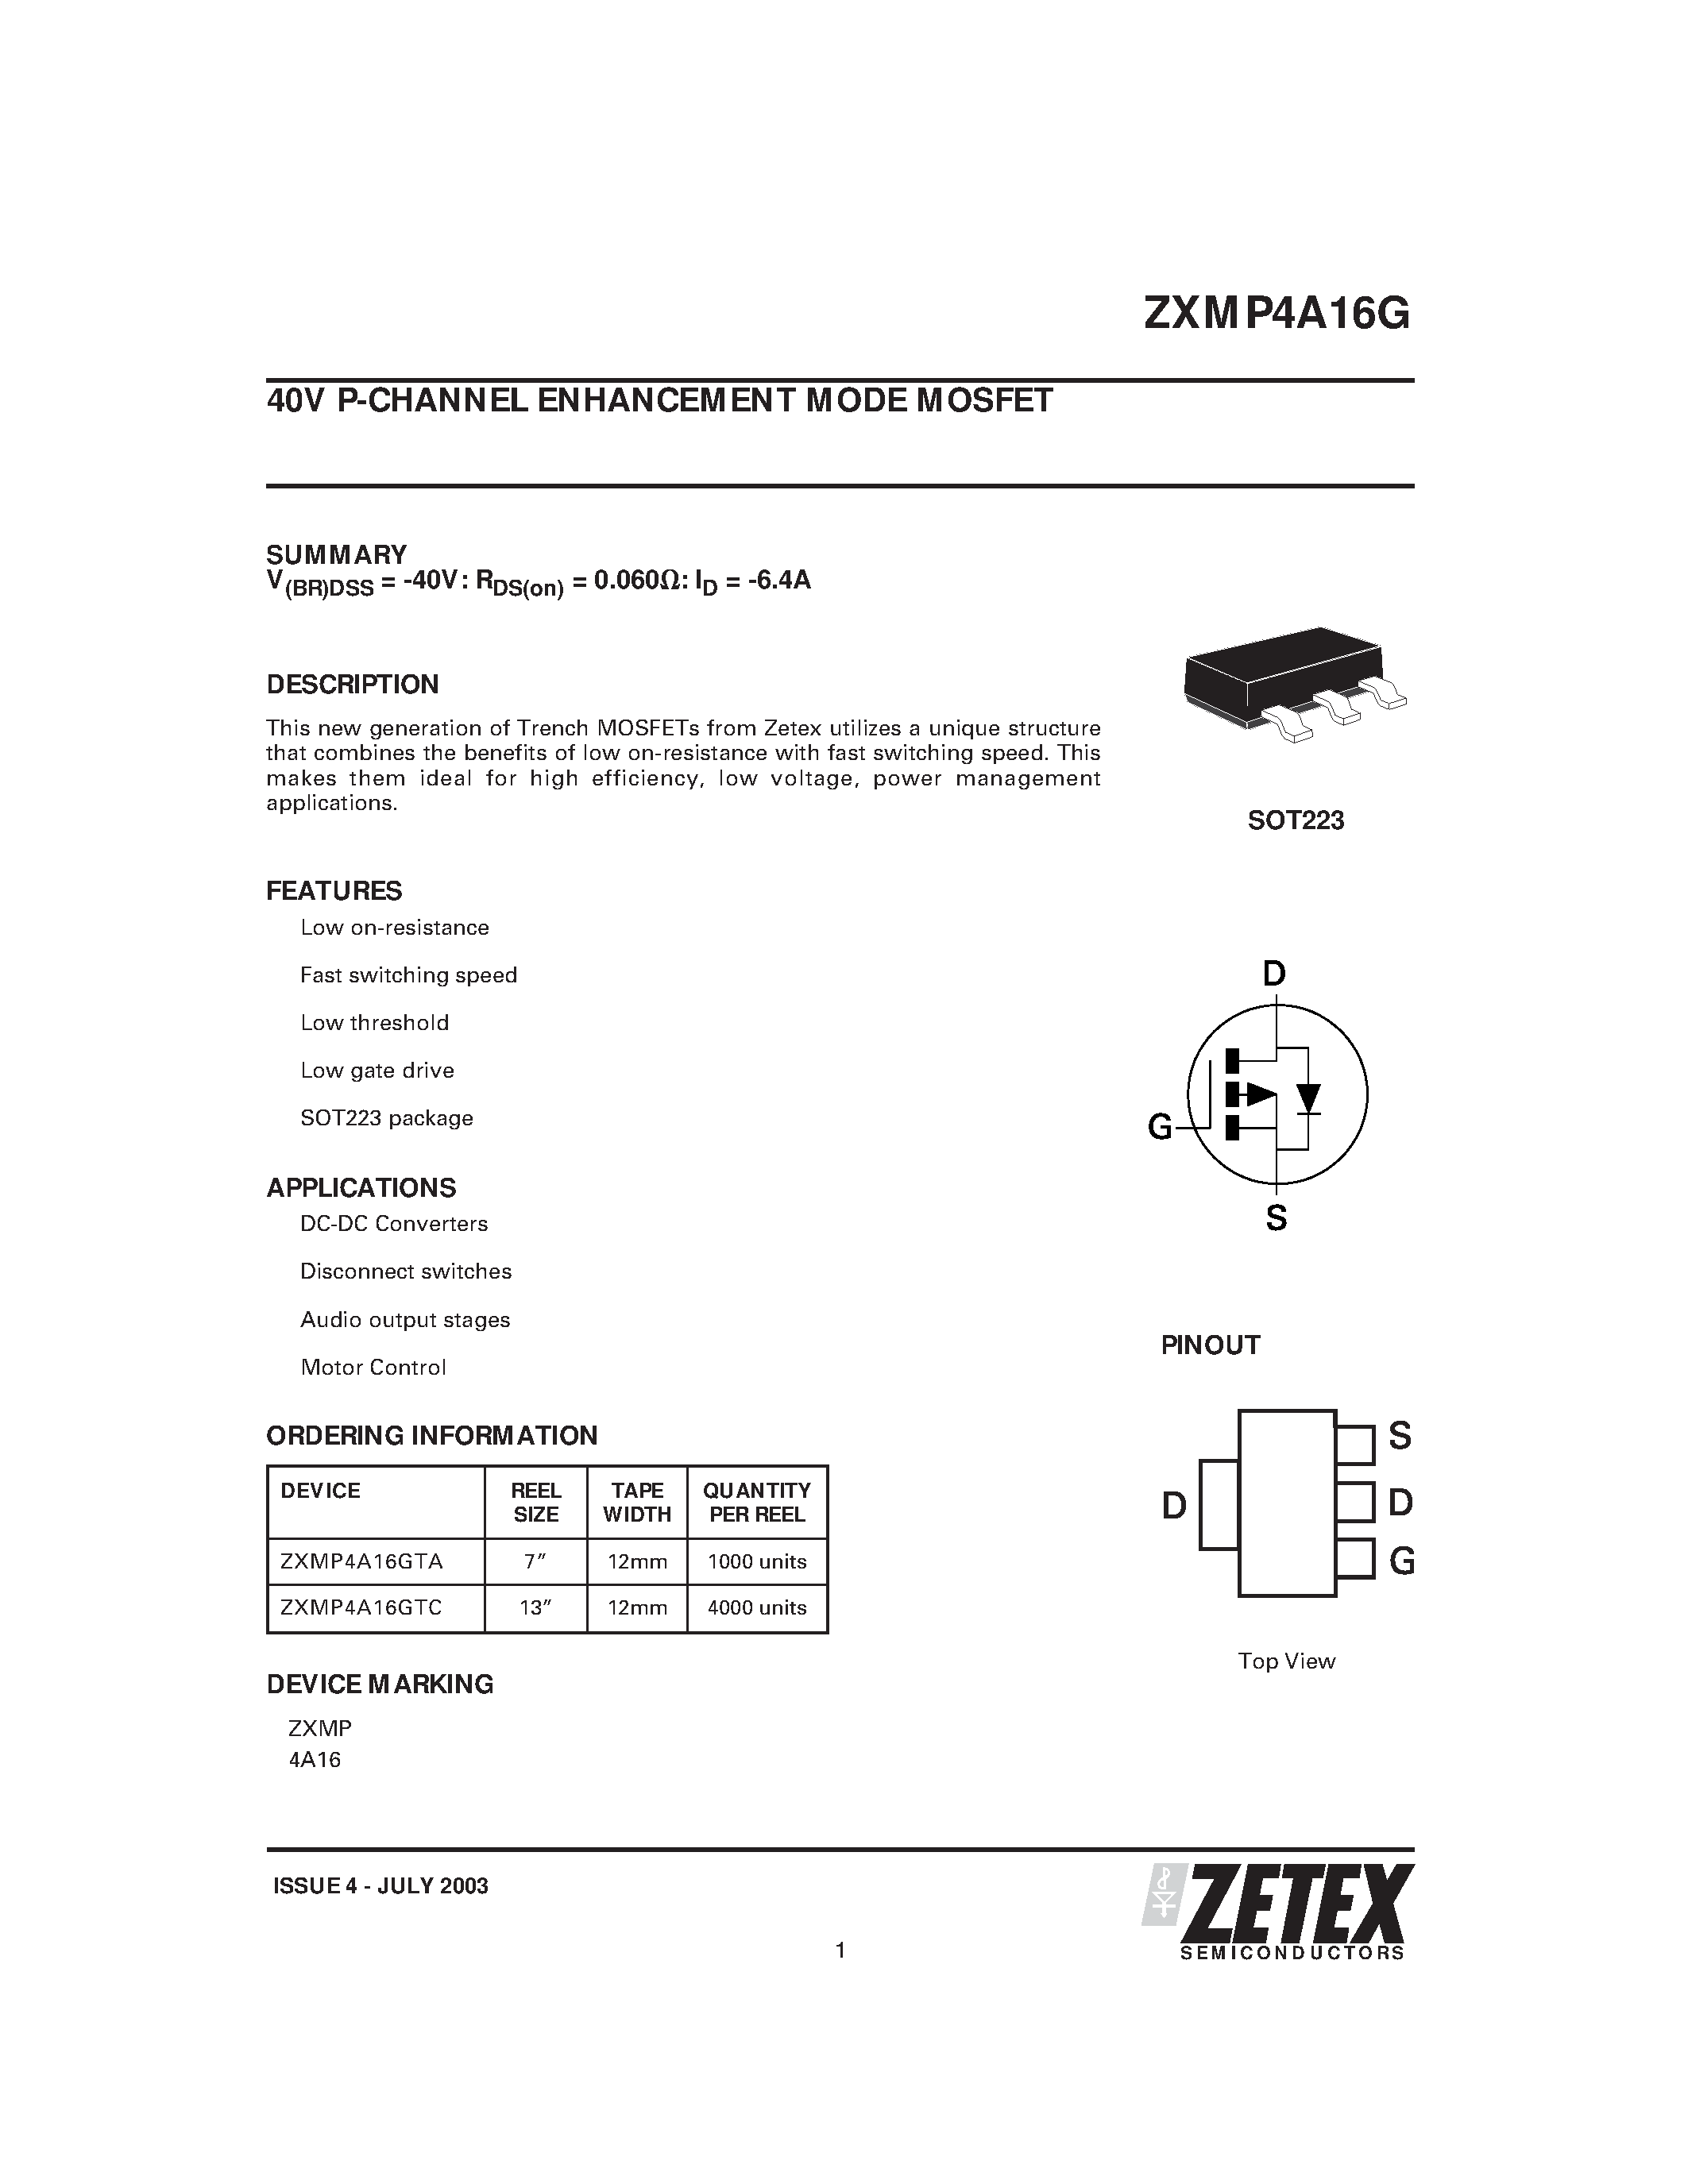 Datasheet ZXMP4A16G - 40V P-CHANNEL ENHANCEMENT MODE MOSFET page 1